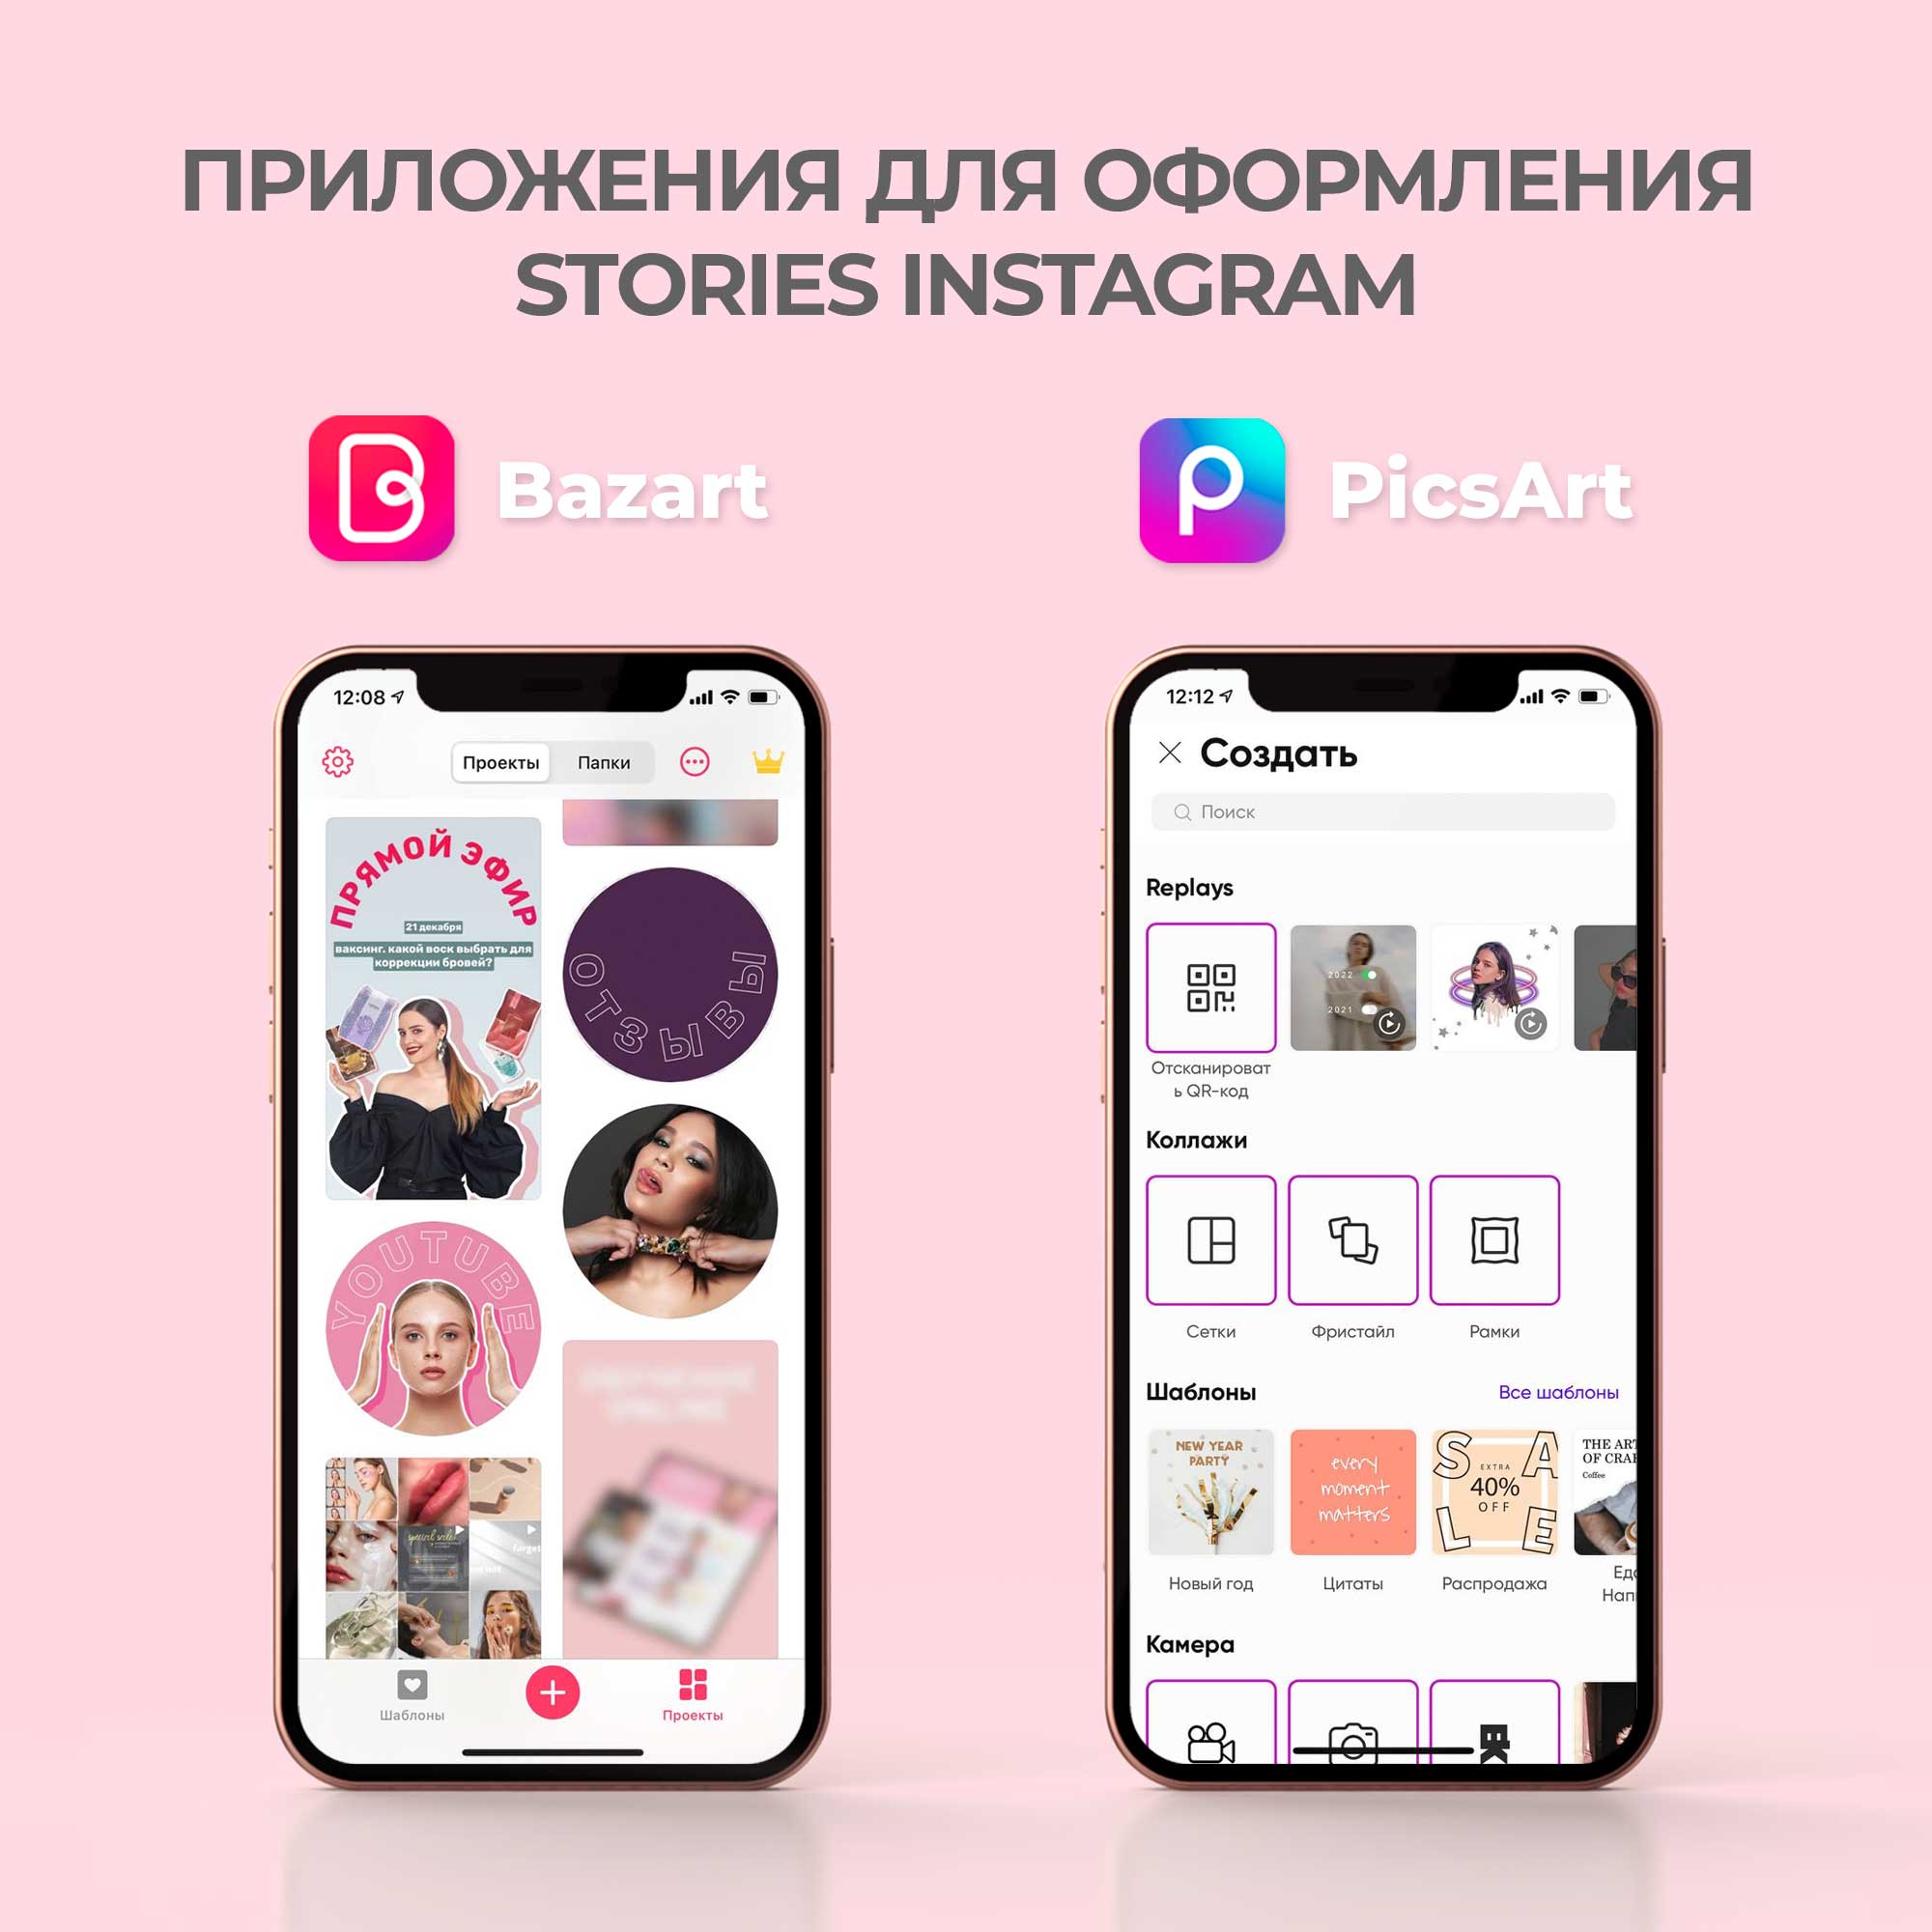 Instagram story apps